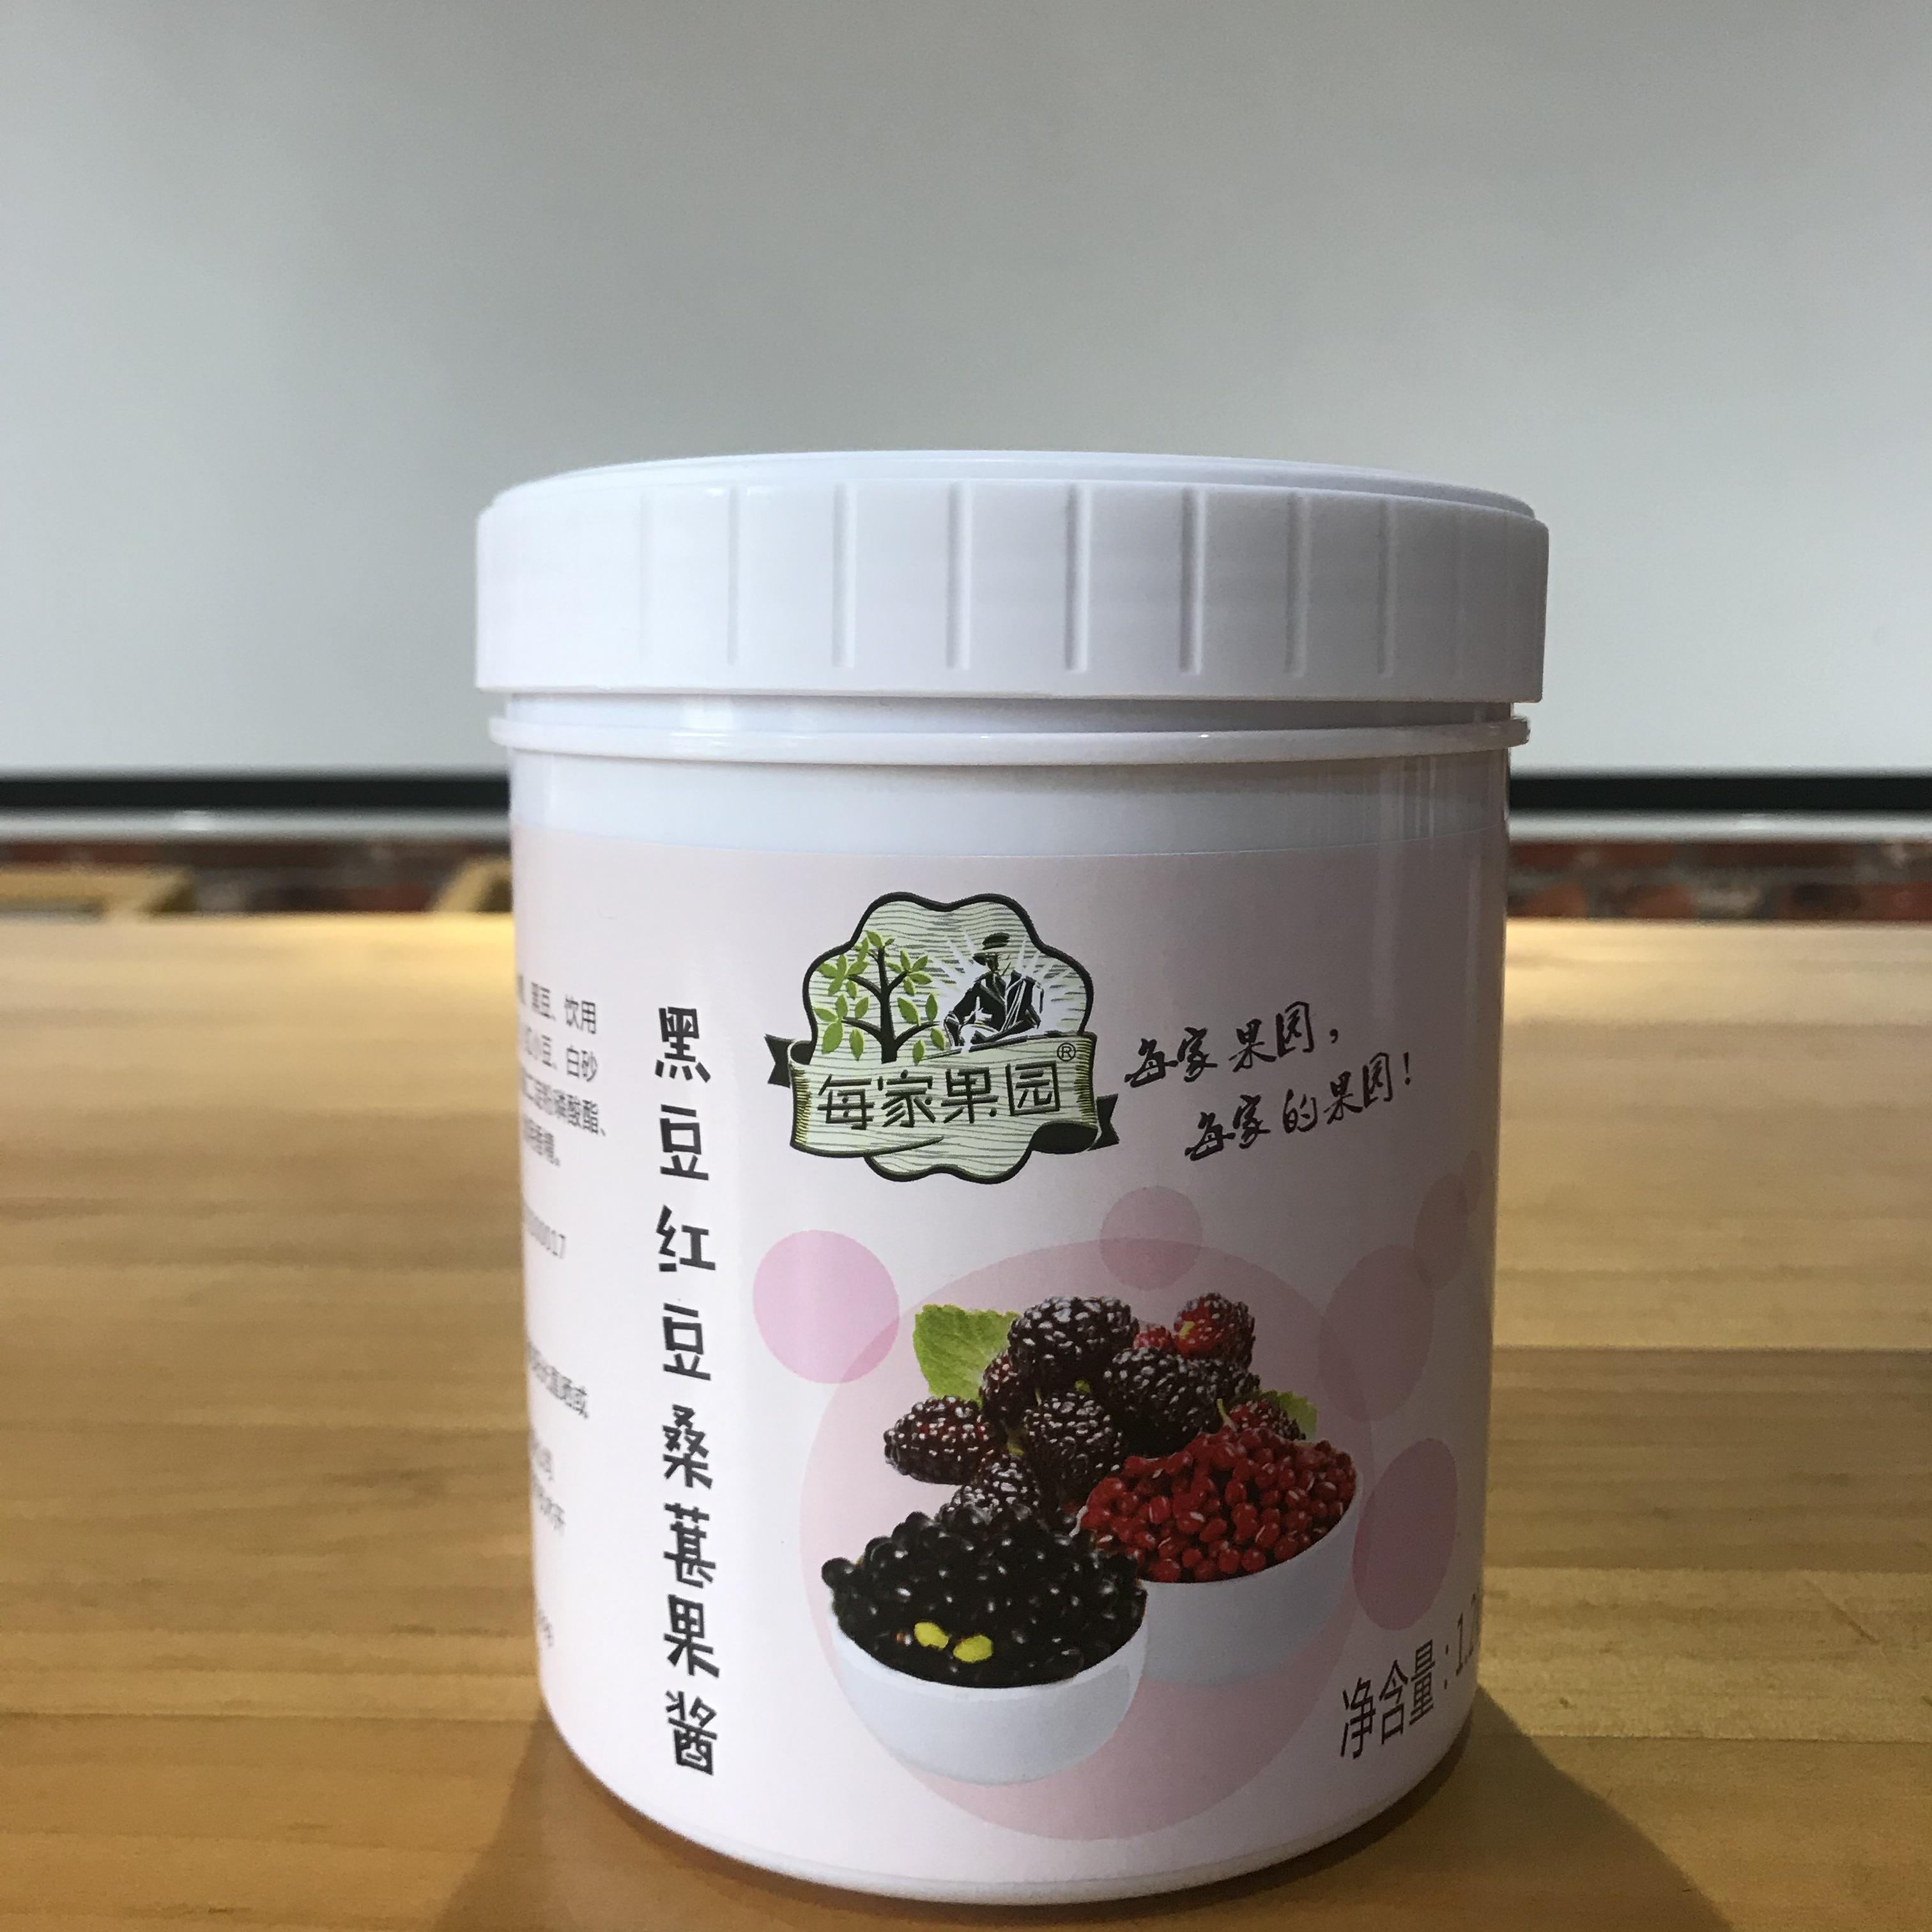 Black Soybean Ormosia Mulberry Jam